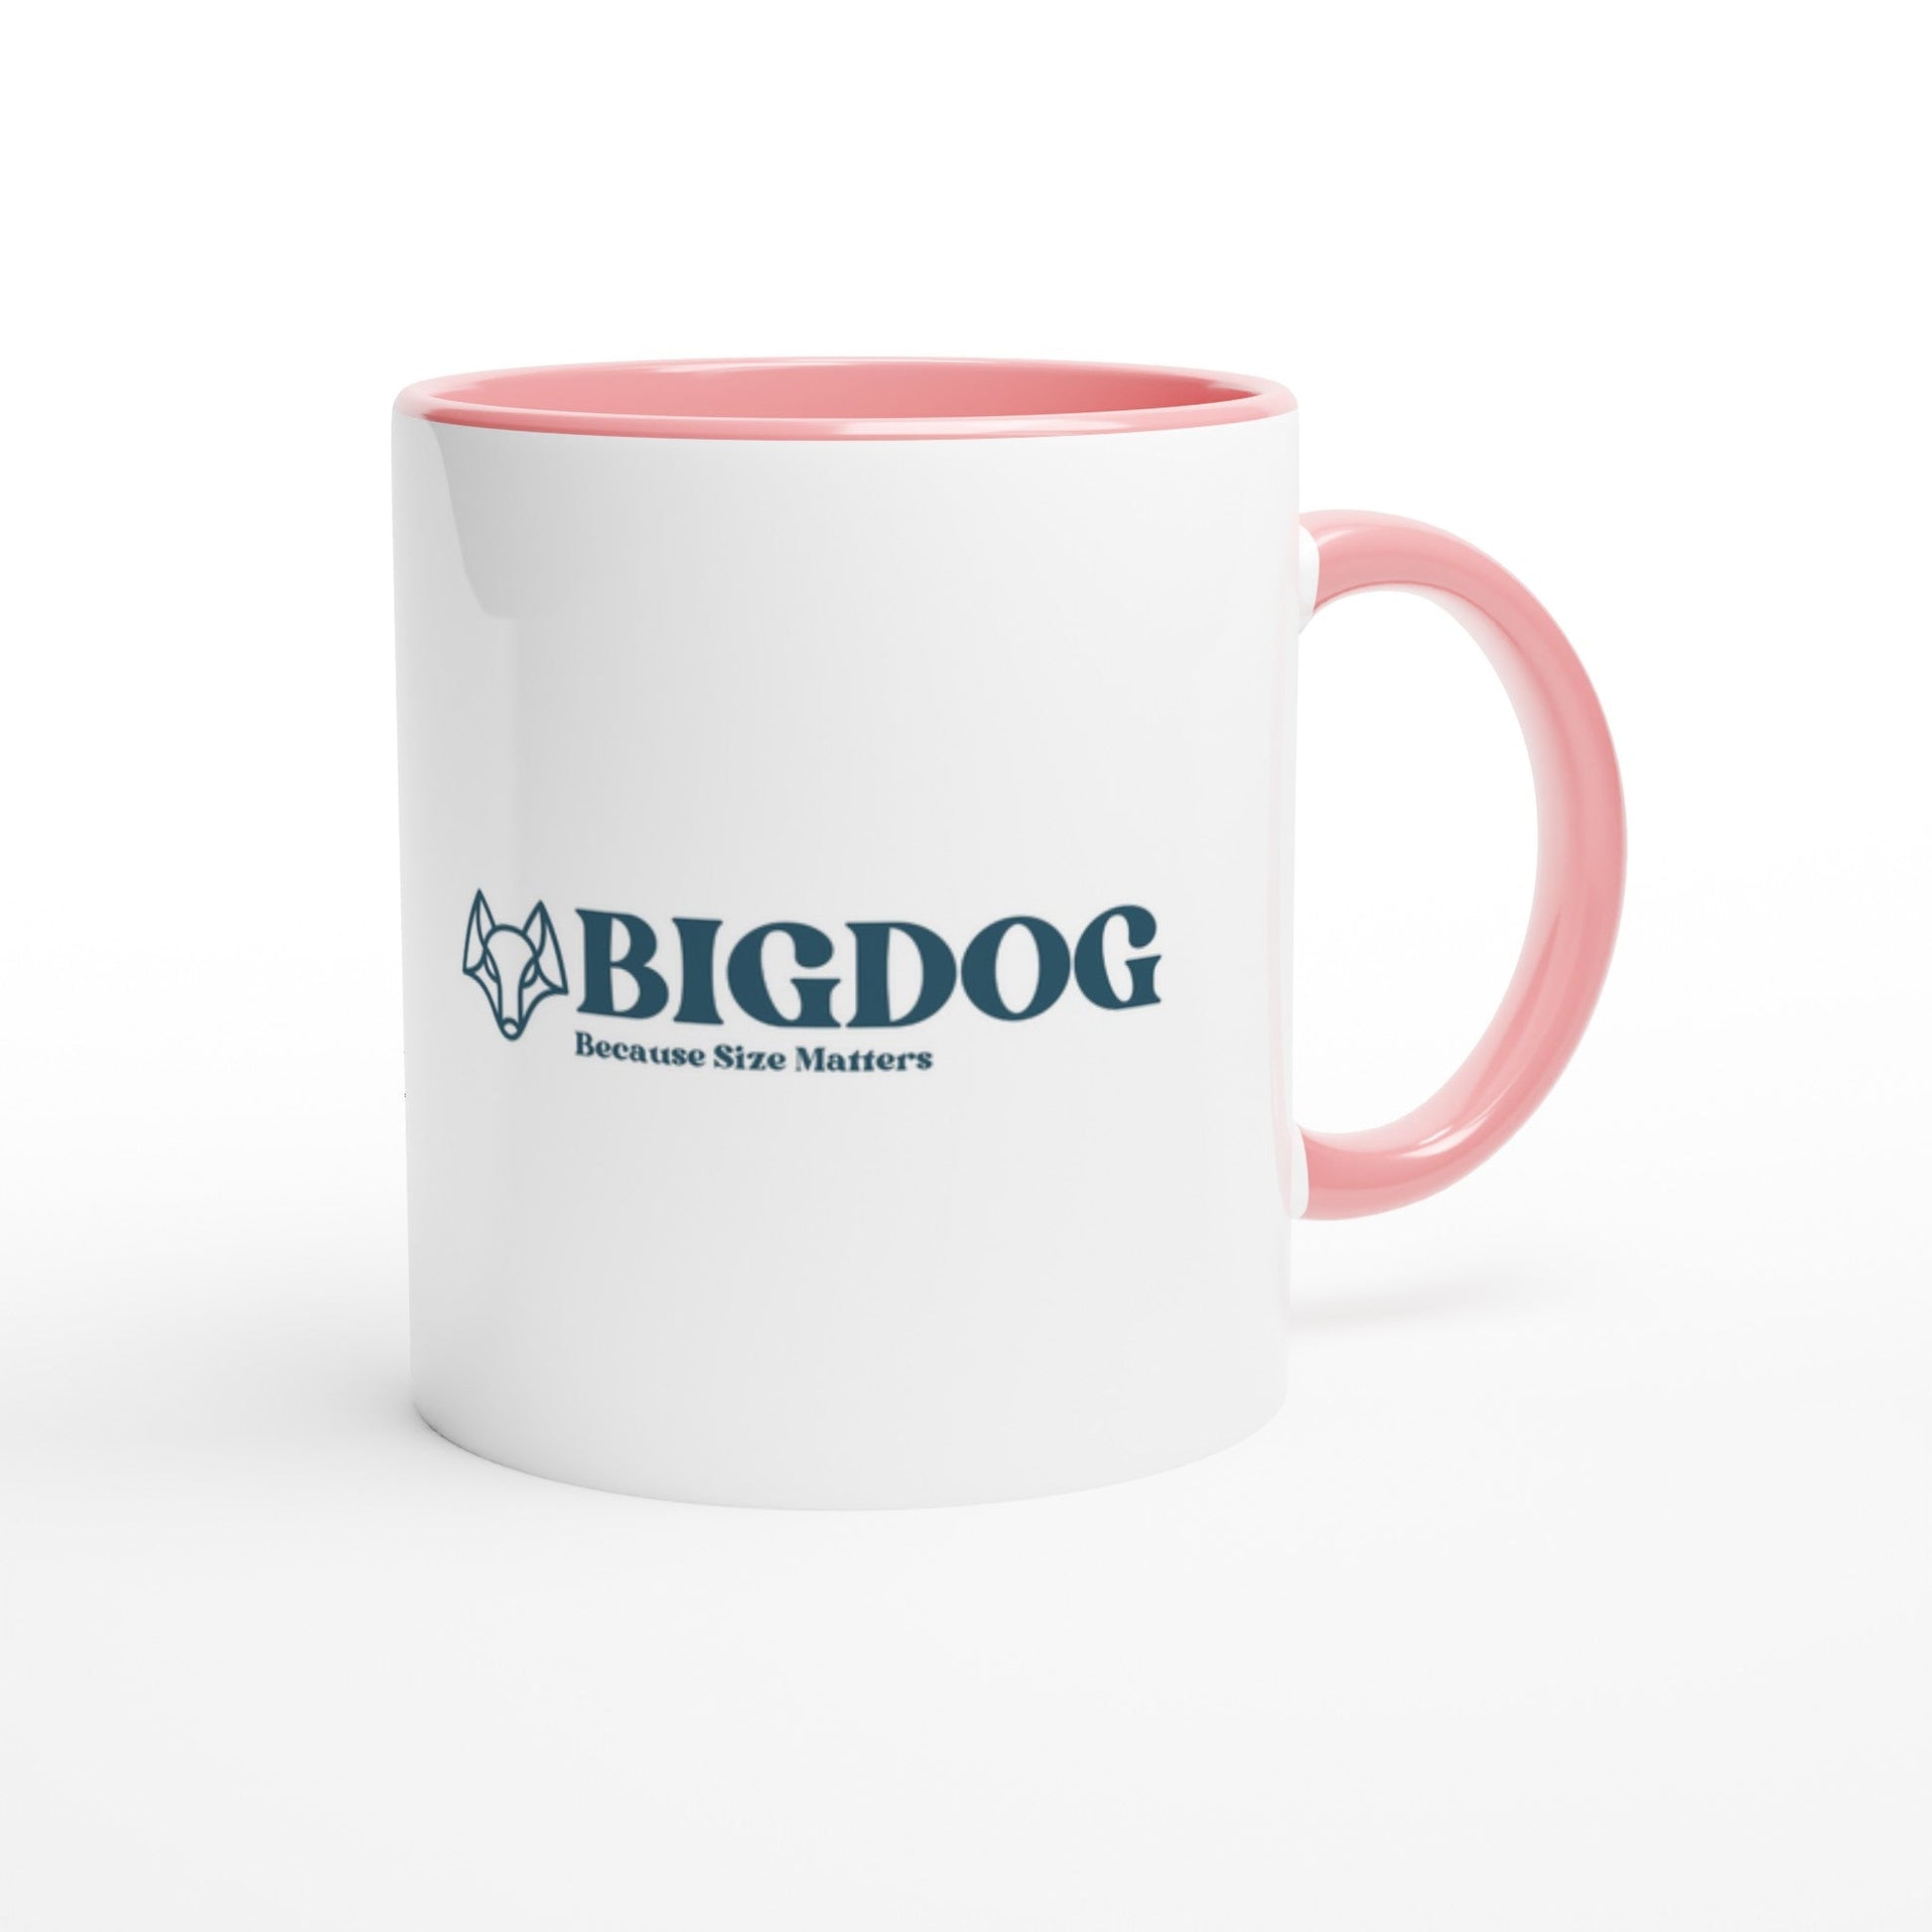 11oz Ceramic Mug with Big Dog slogan - Hobbster